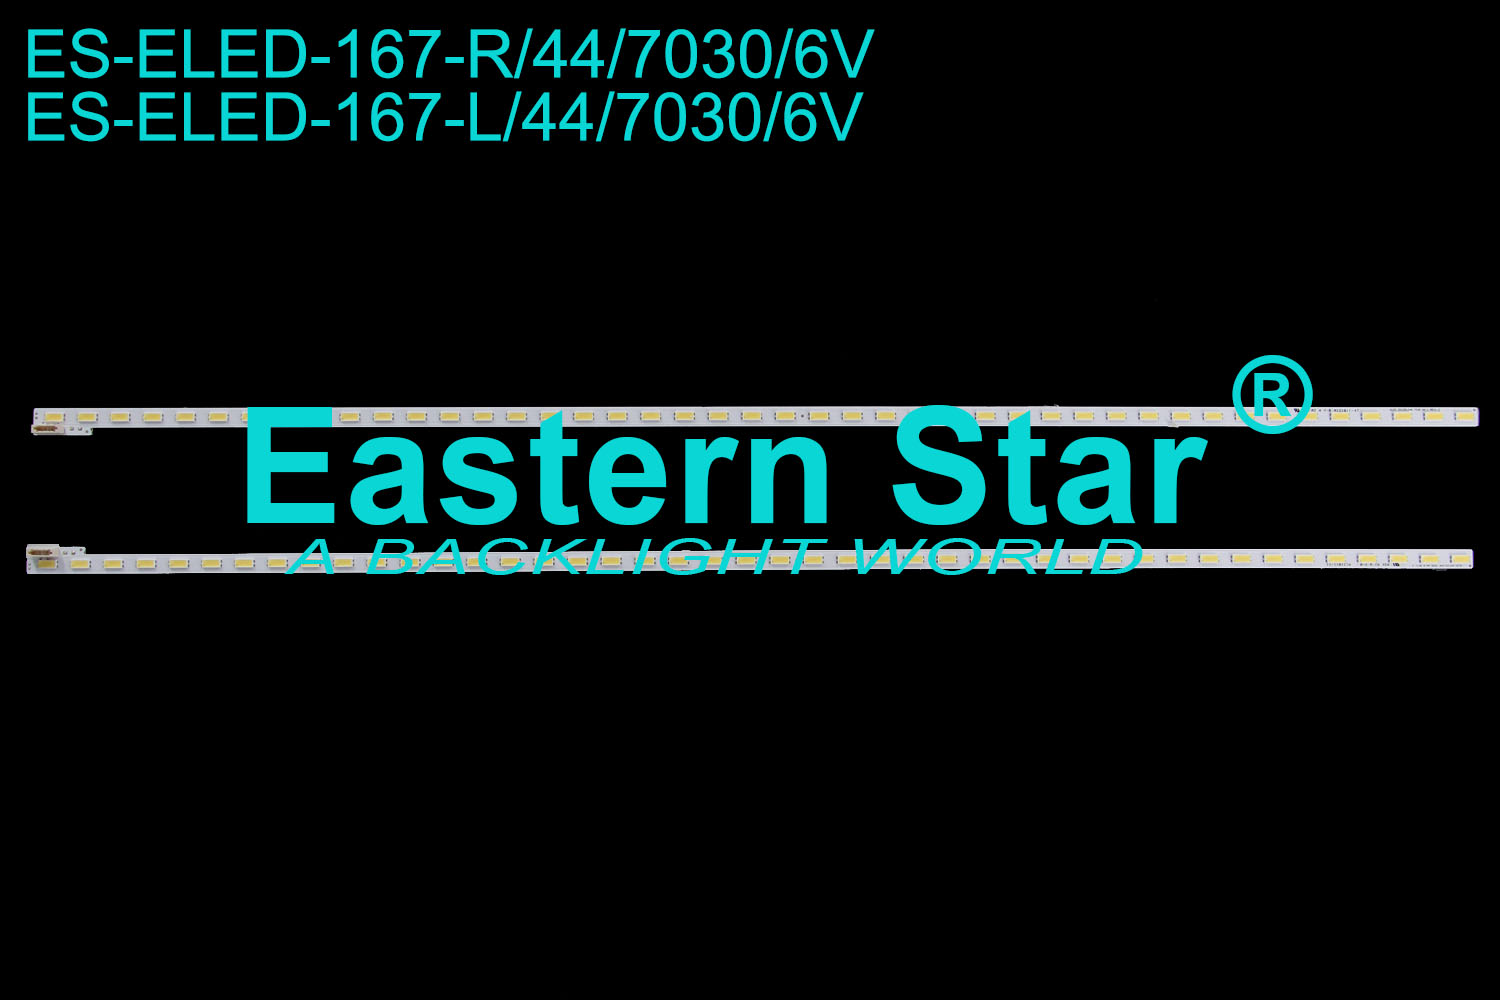 ES-ELED-167 ELED/EDGE TV backlight 46'' 44LEDs SLED 2012SLS46 7030 44 L/R REV1.2 LED STRIPS(2)